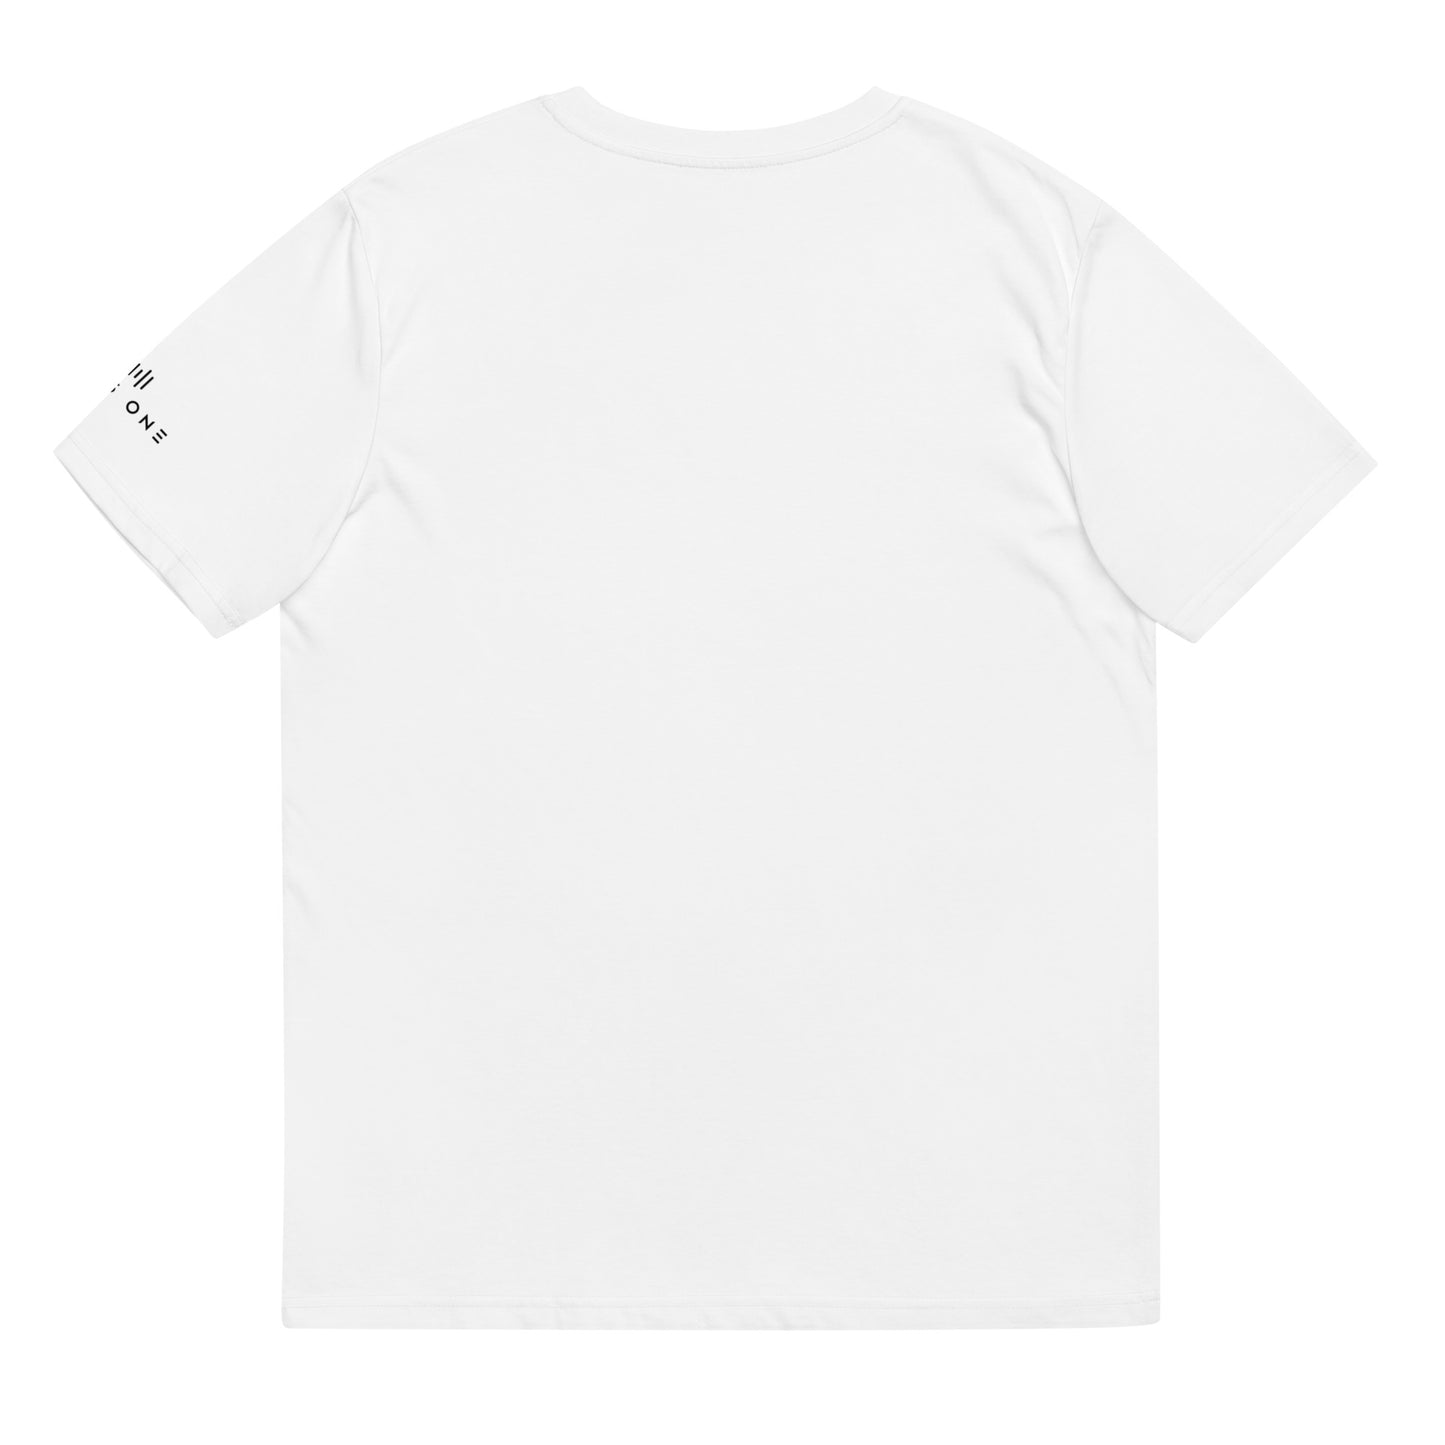 NFTM (v3) Unisex organic cotton t-shirt (Orange Text)